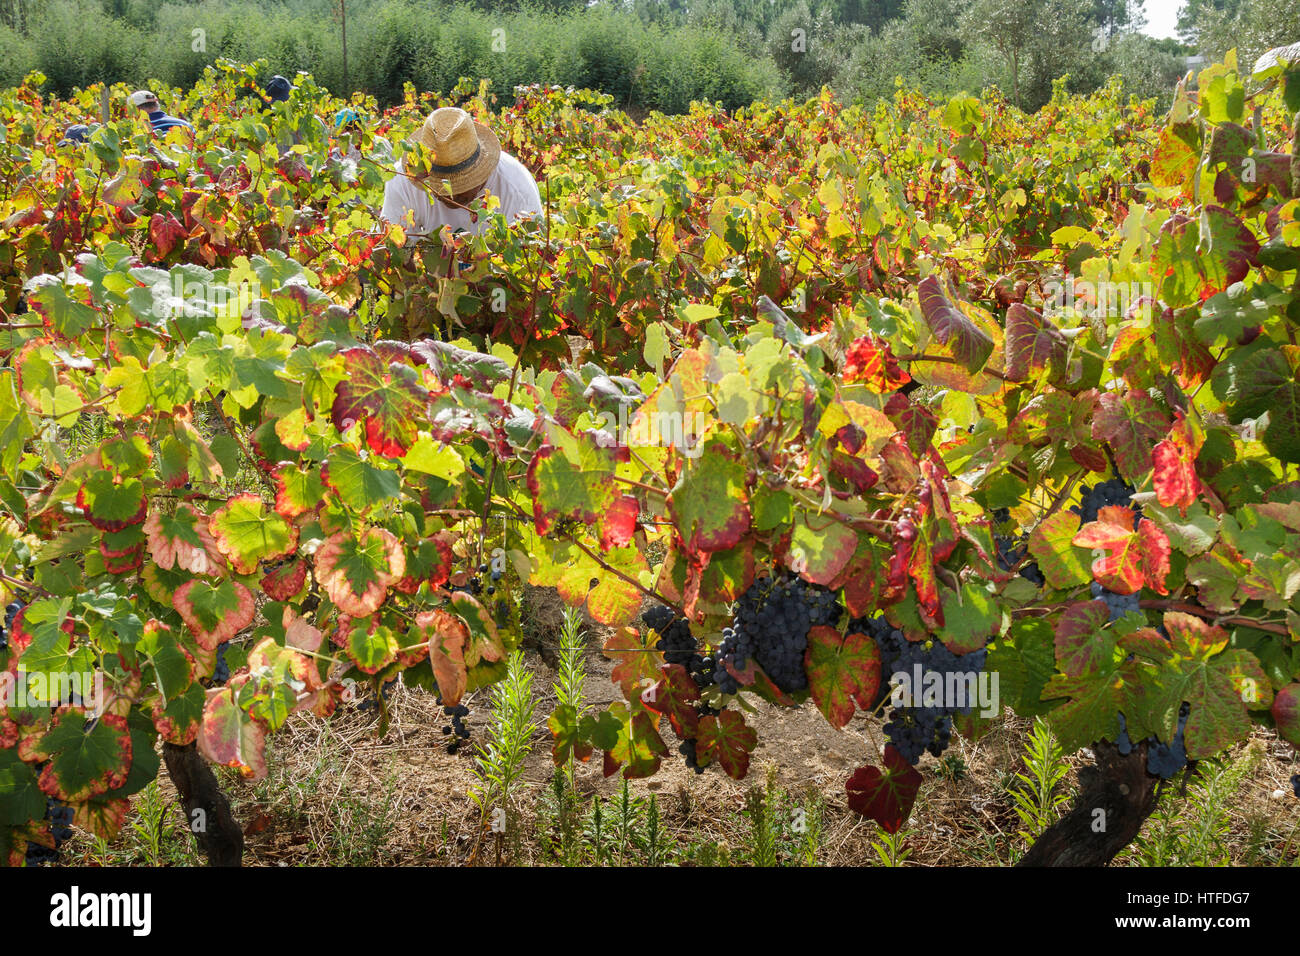 Grape harvest - Serra da Estrela - Grape picking a man wearing a straw hat working in the field Stock Photo